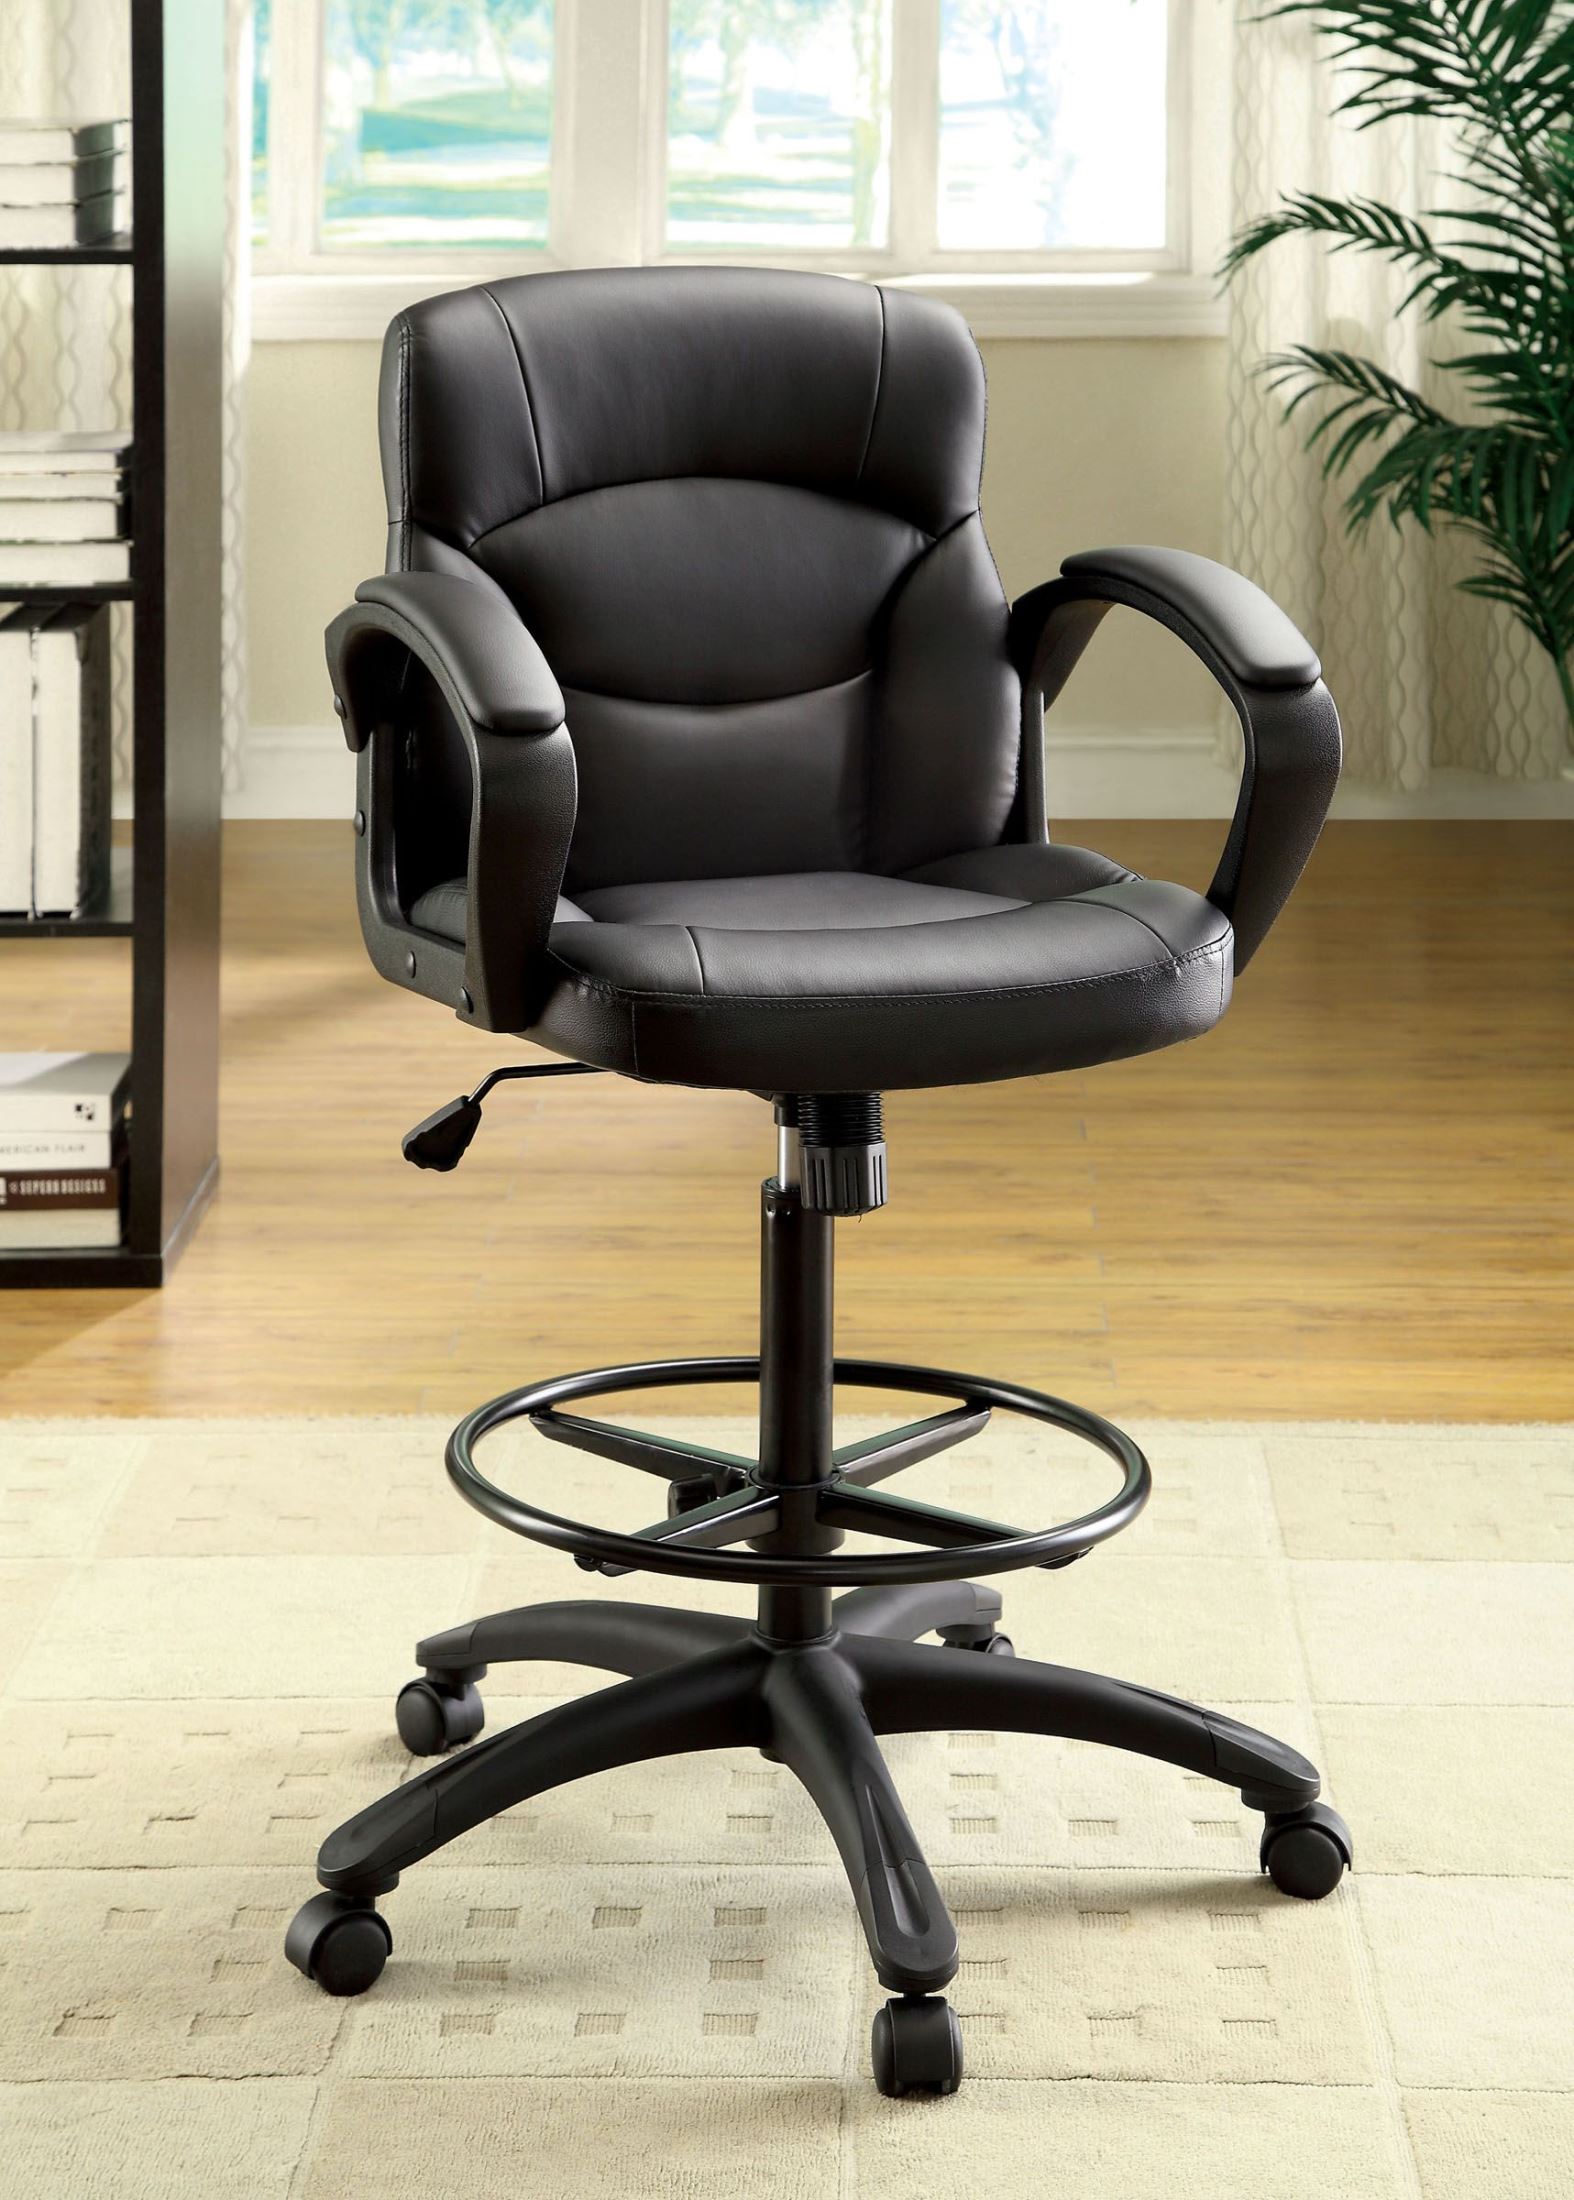 Furniture of America Belleville Black Leatherette Adjustable Height